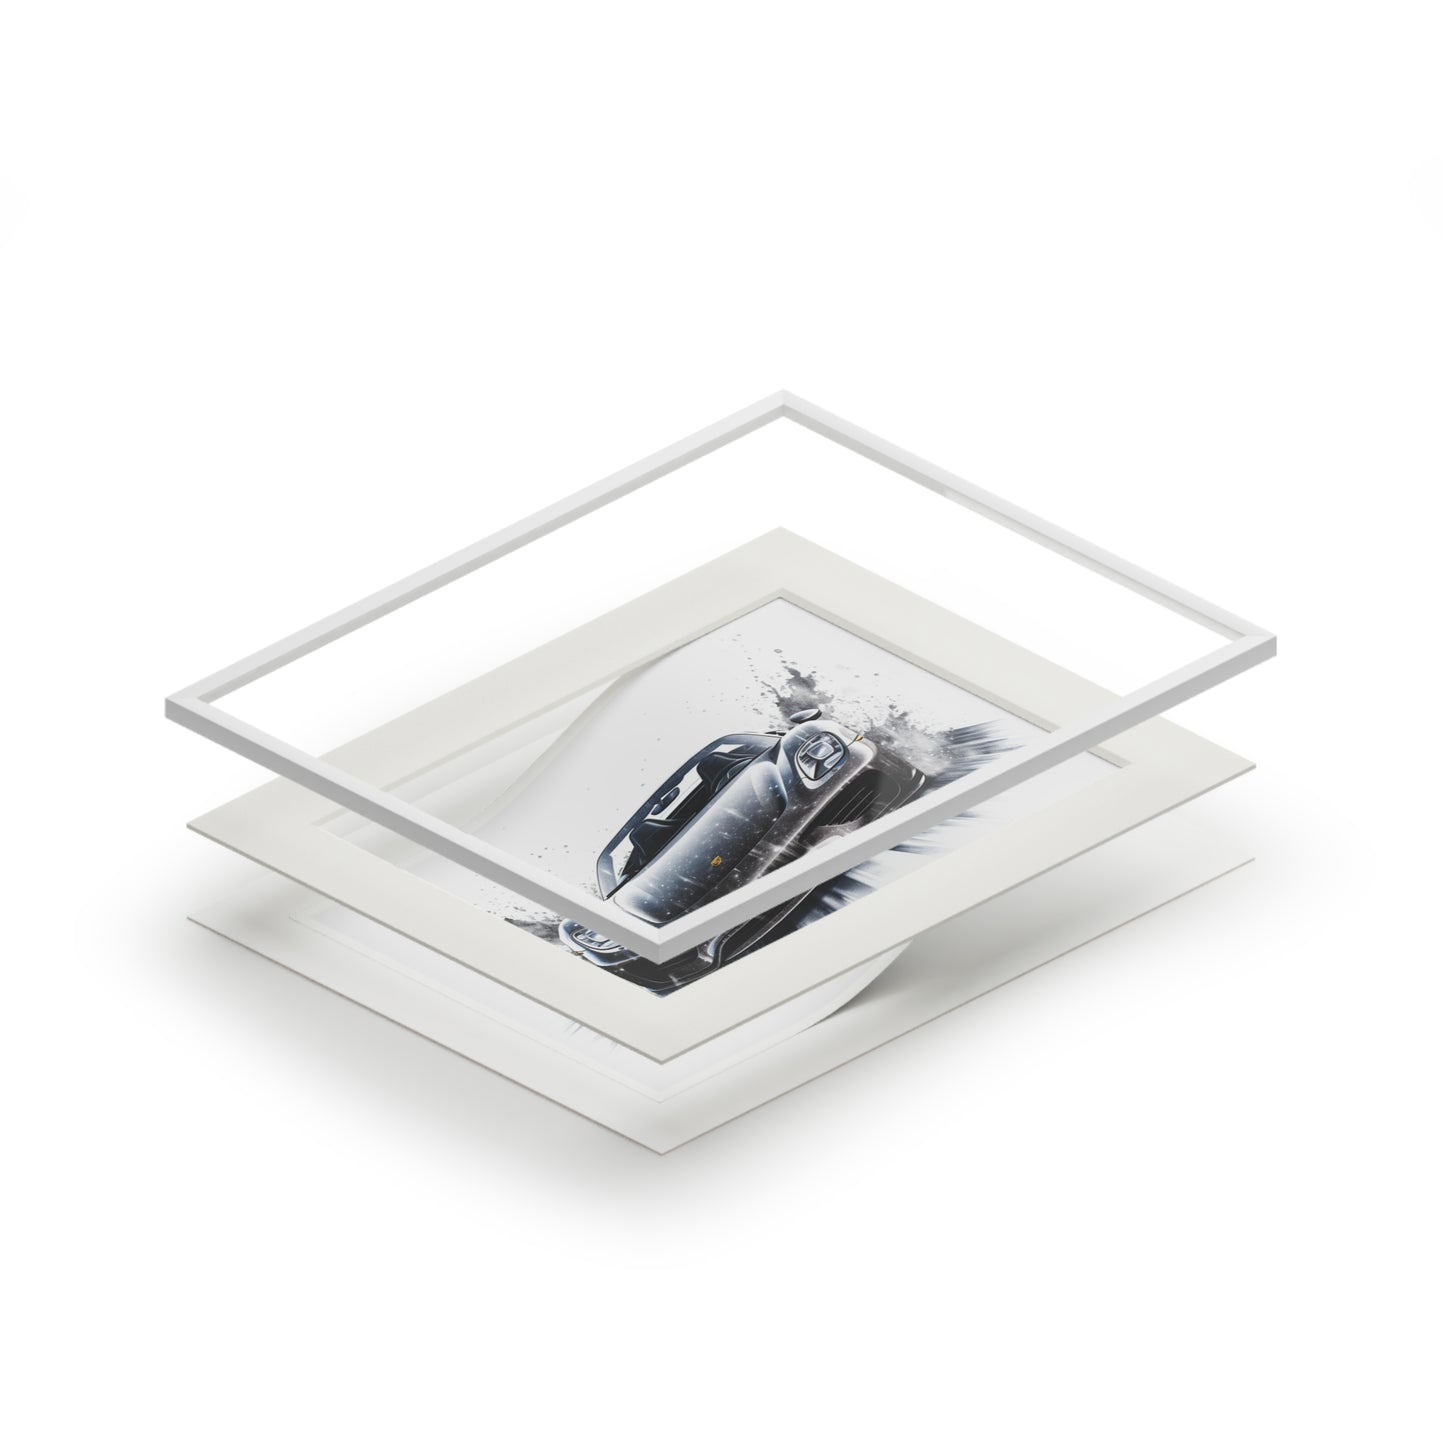 Fine Art Prints (Passepartout Paper Frame) 918 Spyder white background driving fast with water splashing 3